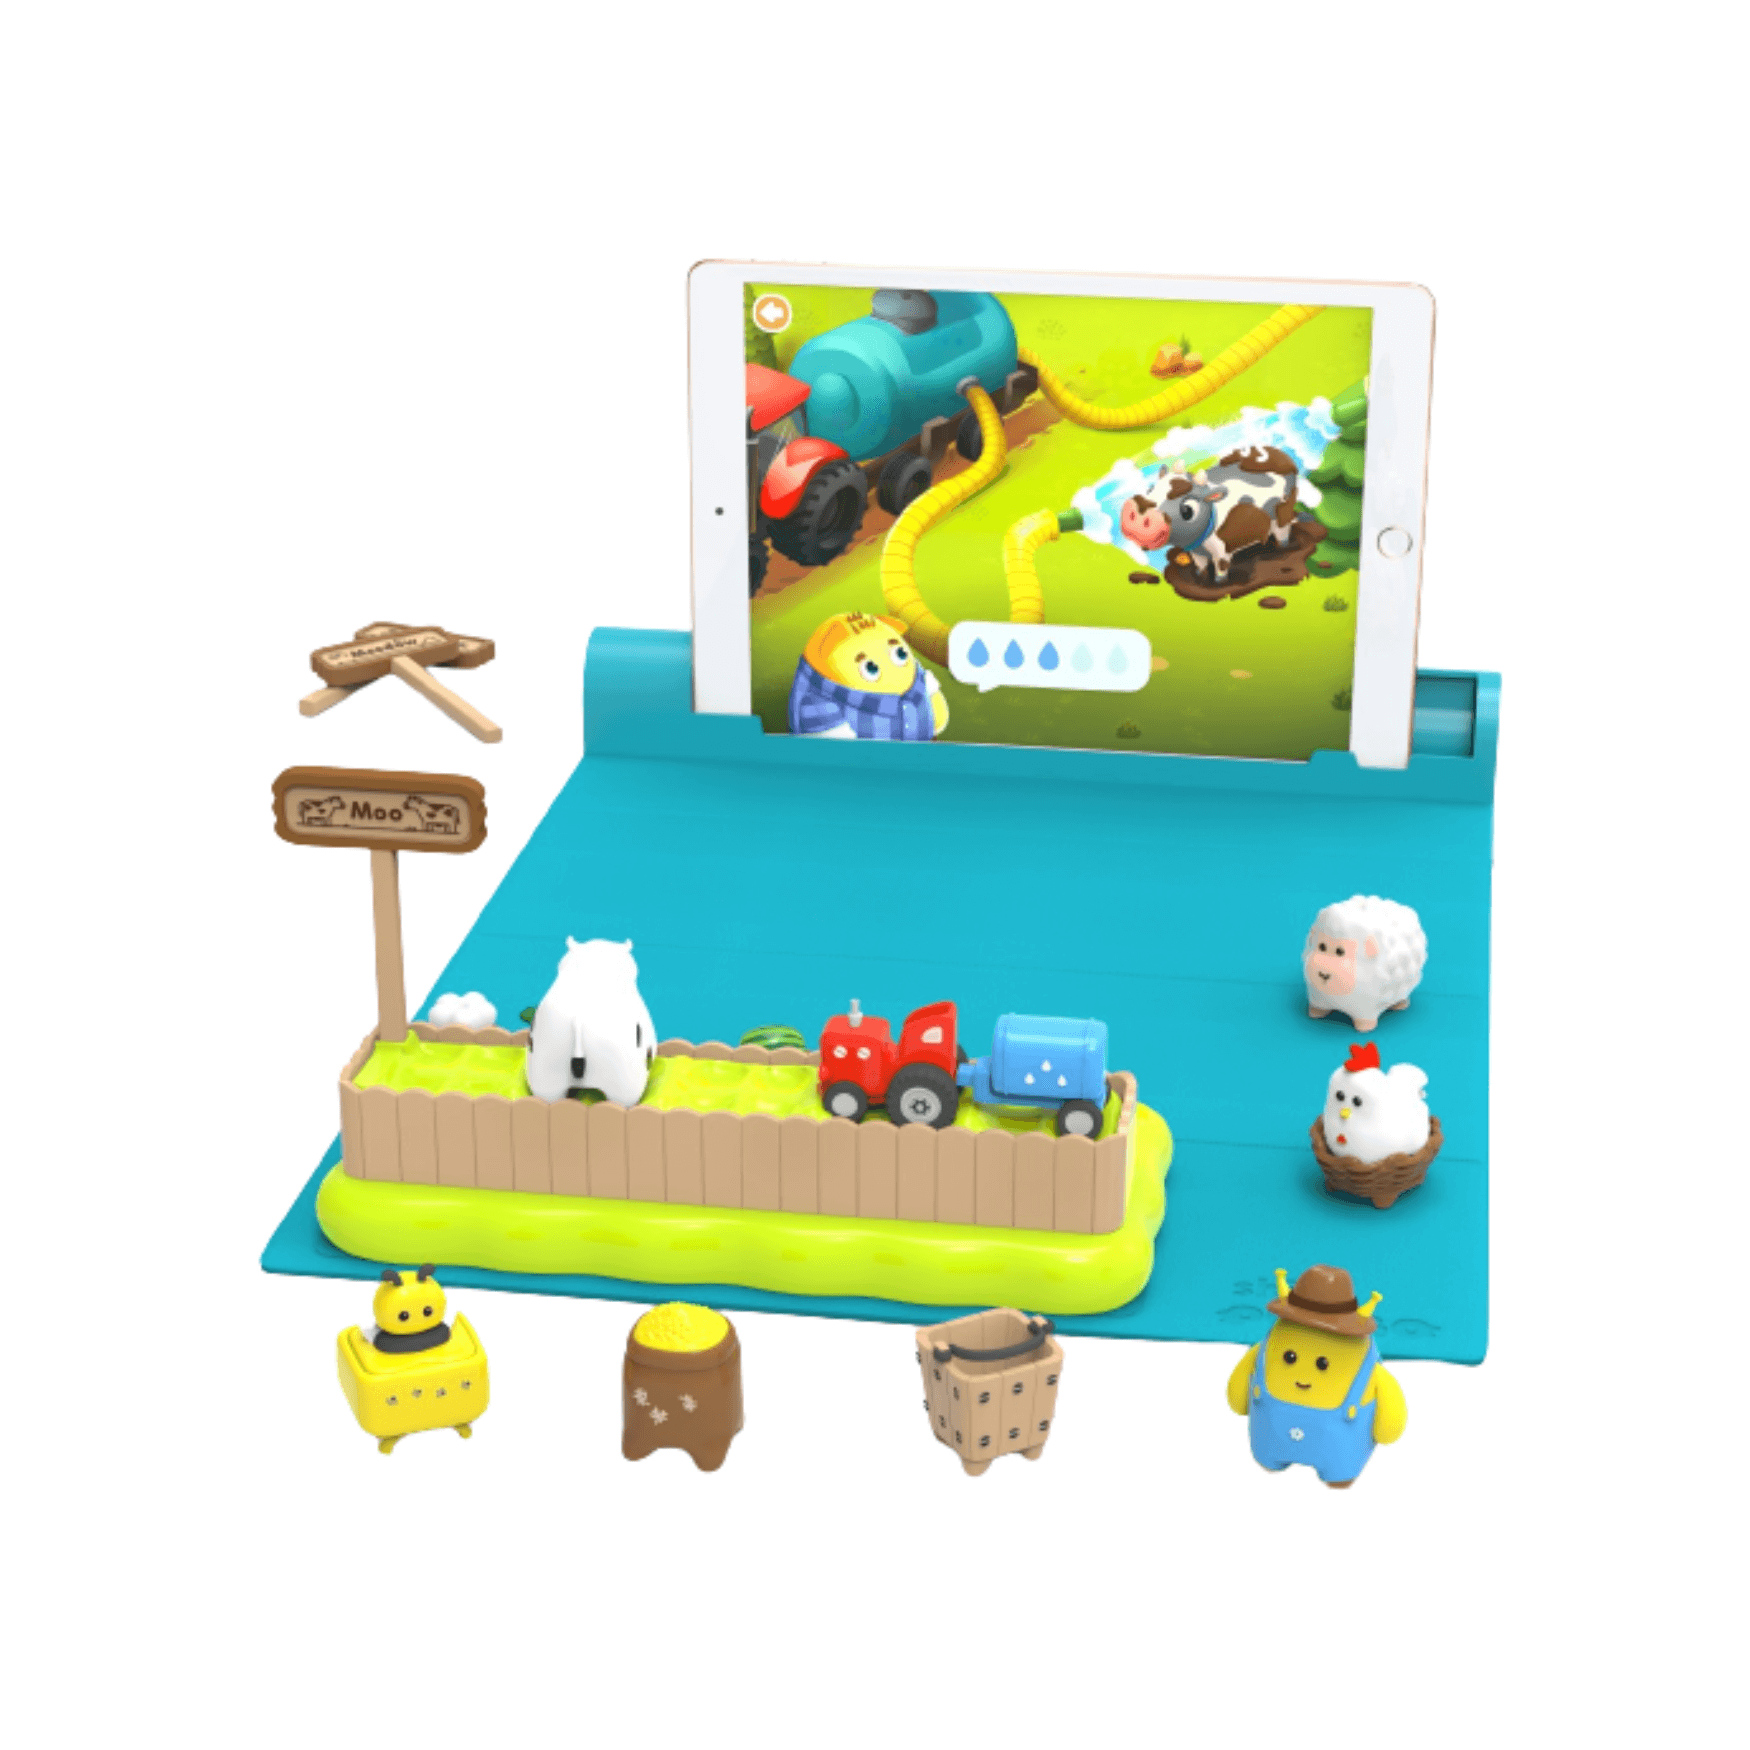 PlayShifu Plugo Series - Plugo Farm / Plugo Link / Plugo Count / Plugo Tunes / Plugo Letters kids learning & educational